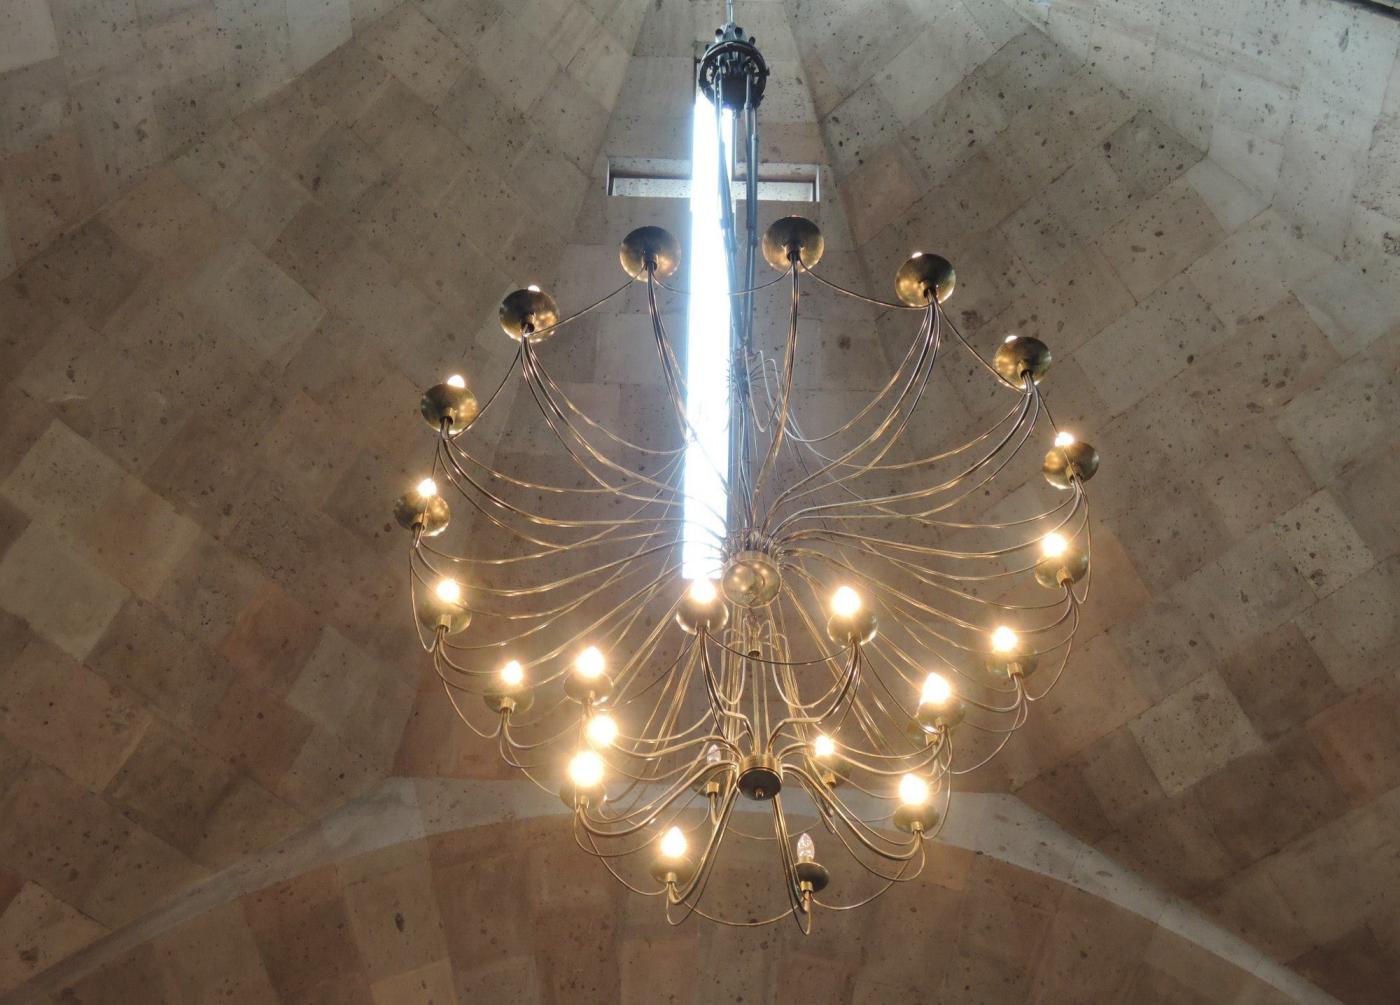 Cross and chandelier in chapel ceiling